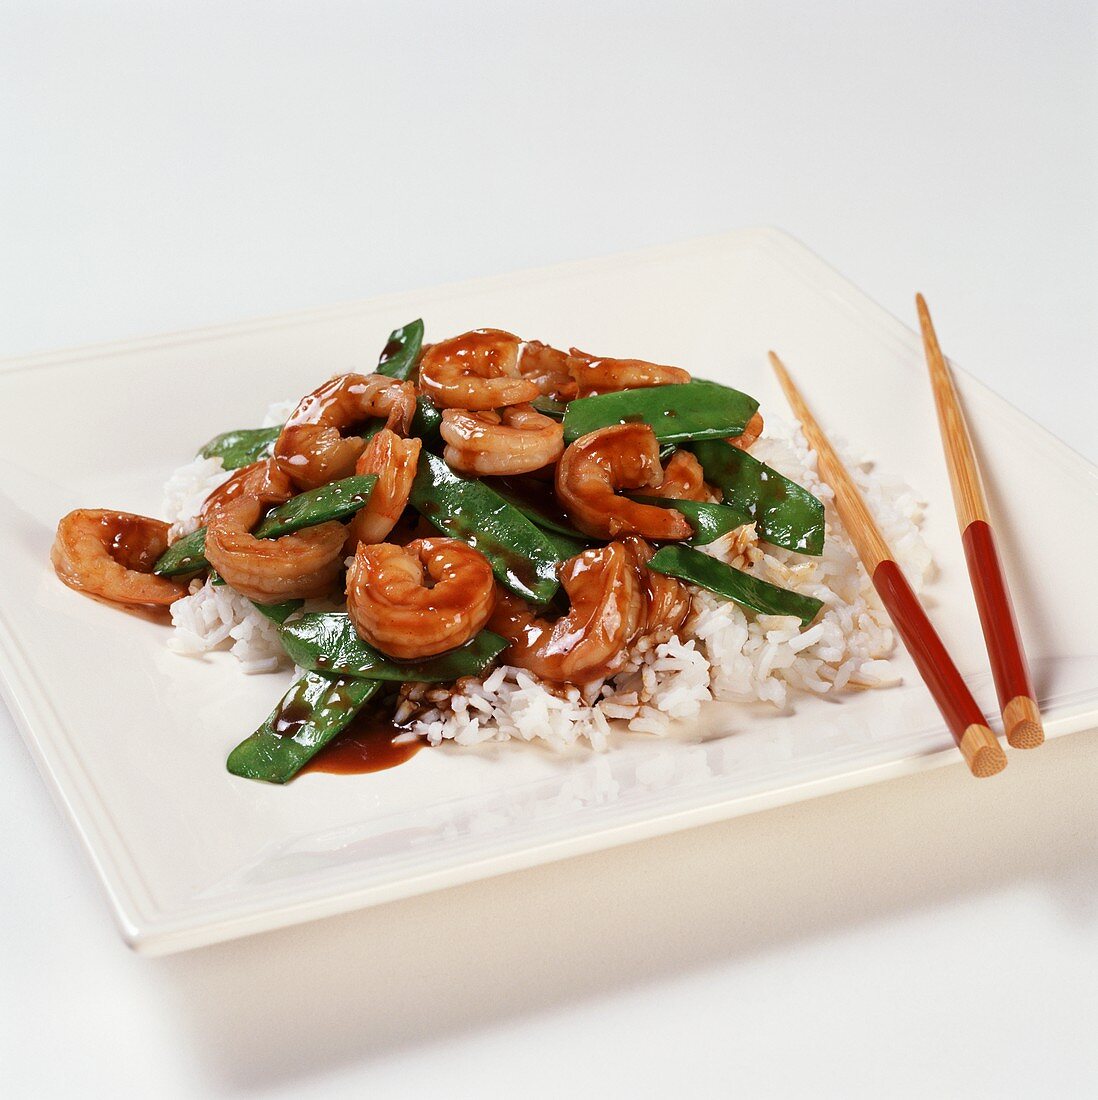 Shrimp and Pea Pods Stir Fry over Rice